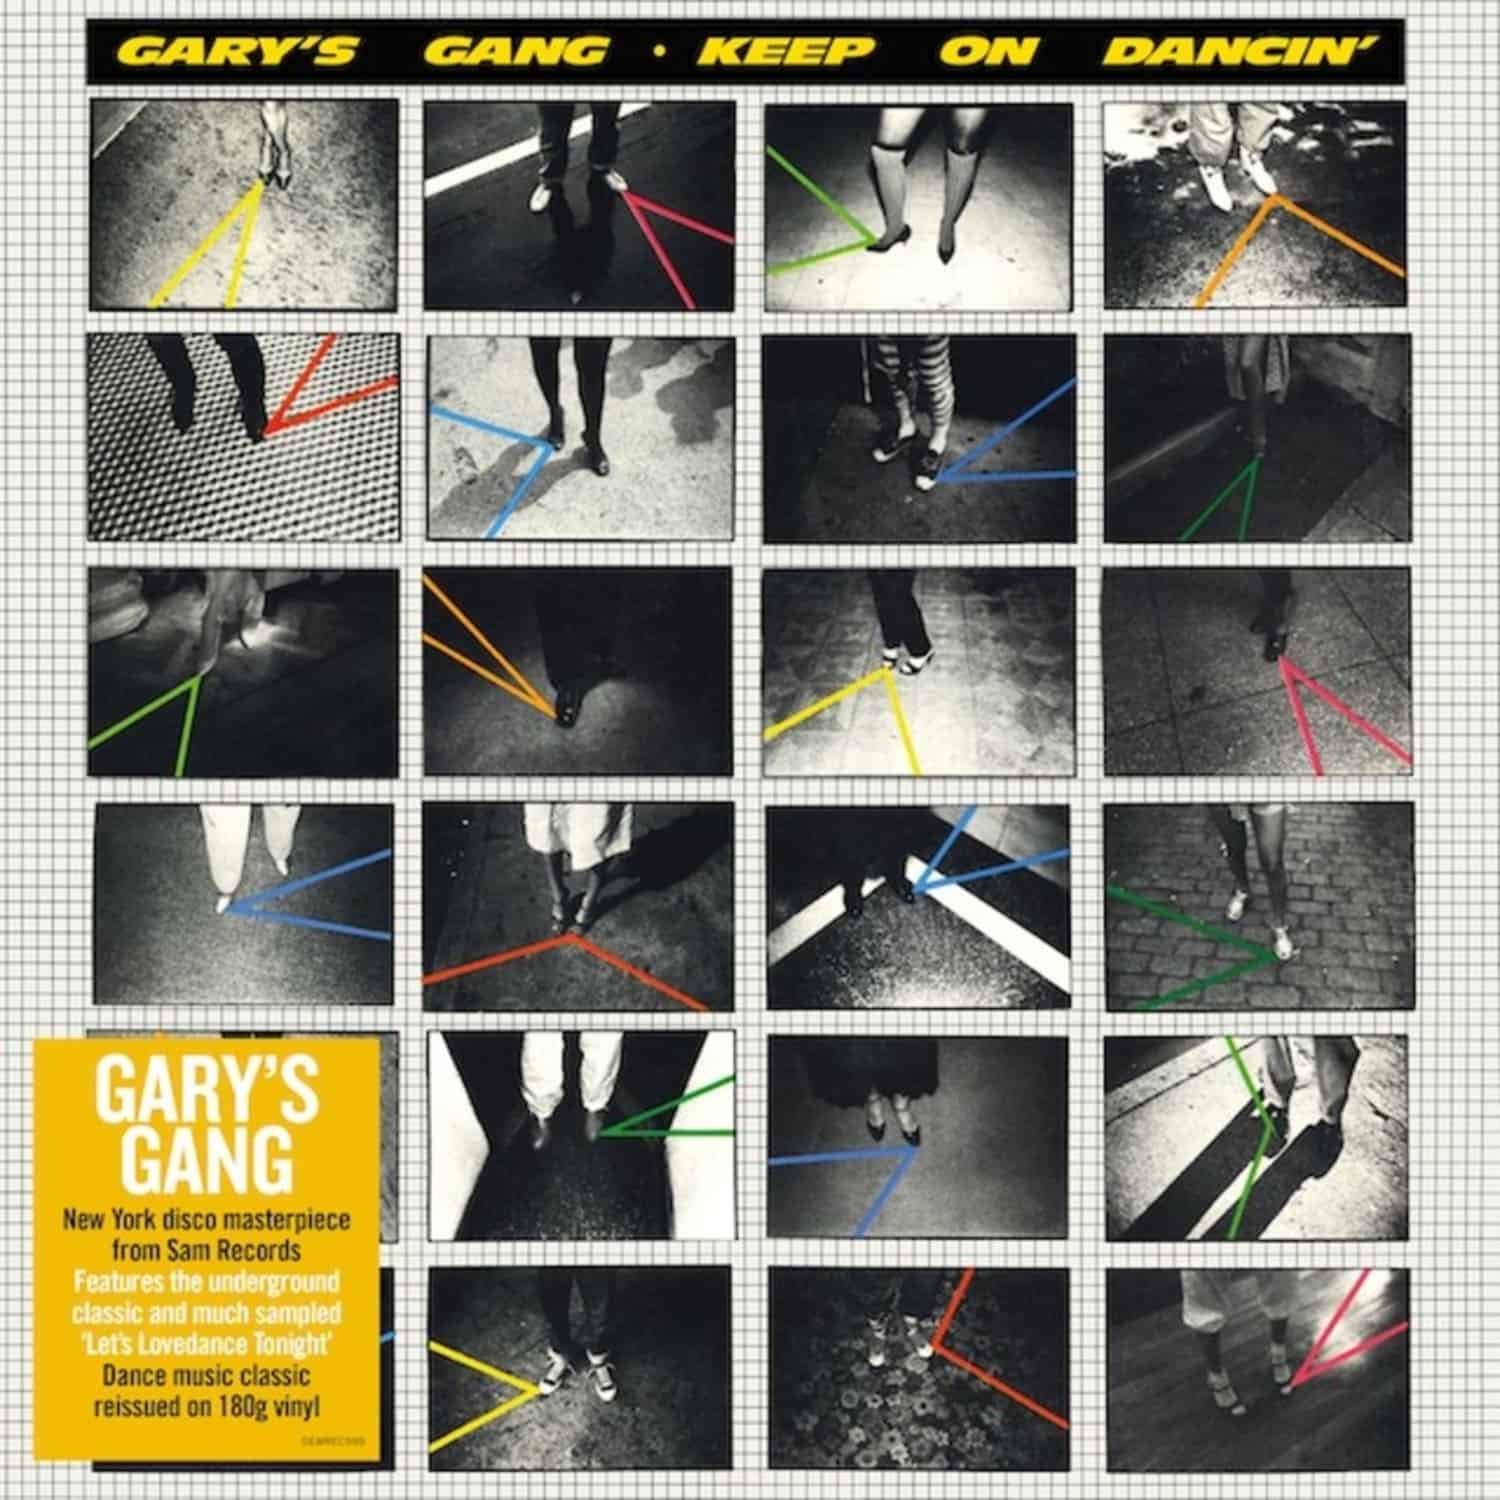 Garys Gang - KEEP ON DANCING 